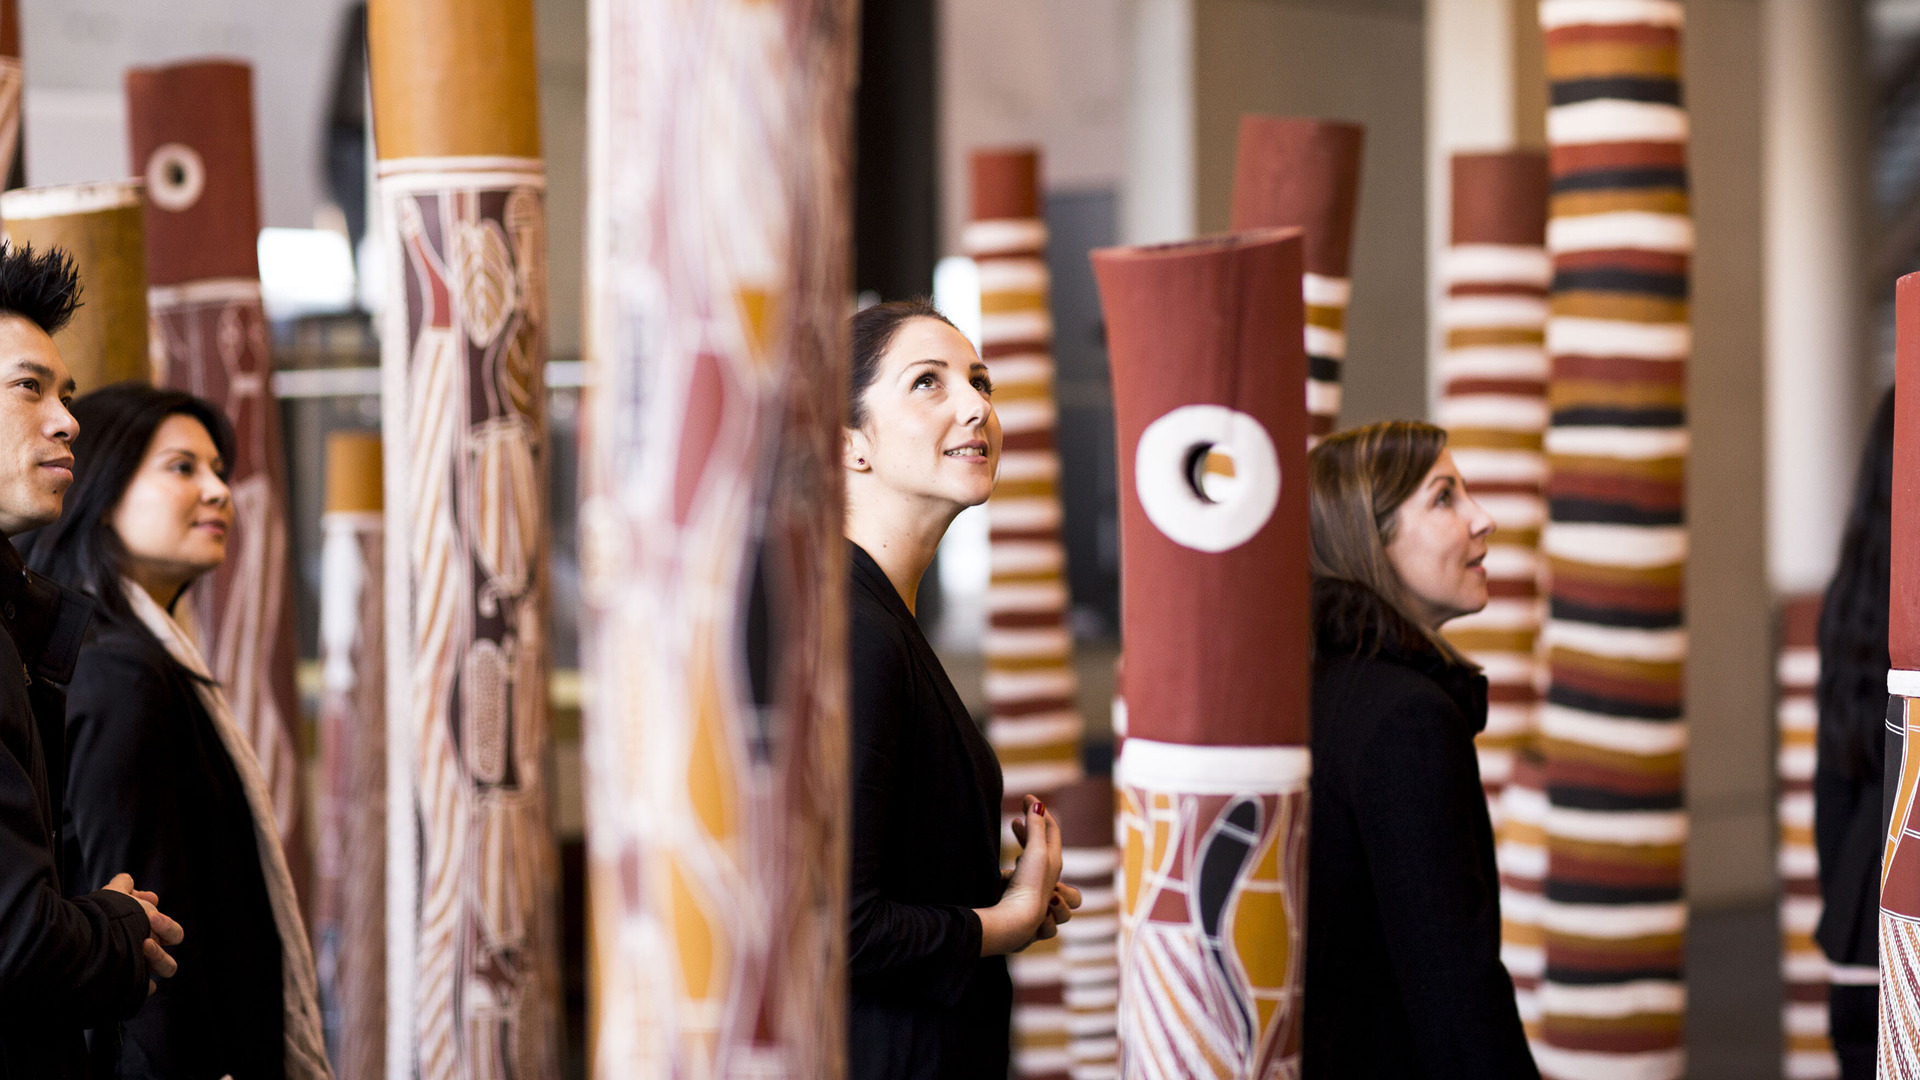 A group of people walk through an Aboriginal artwork.